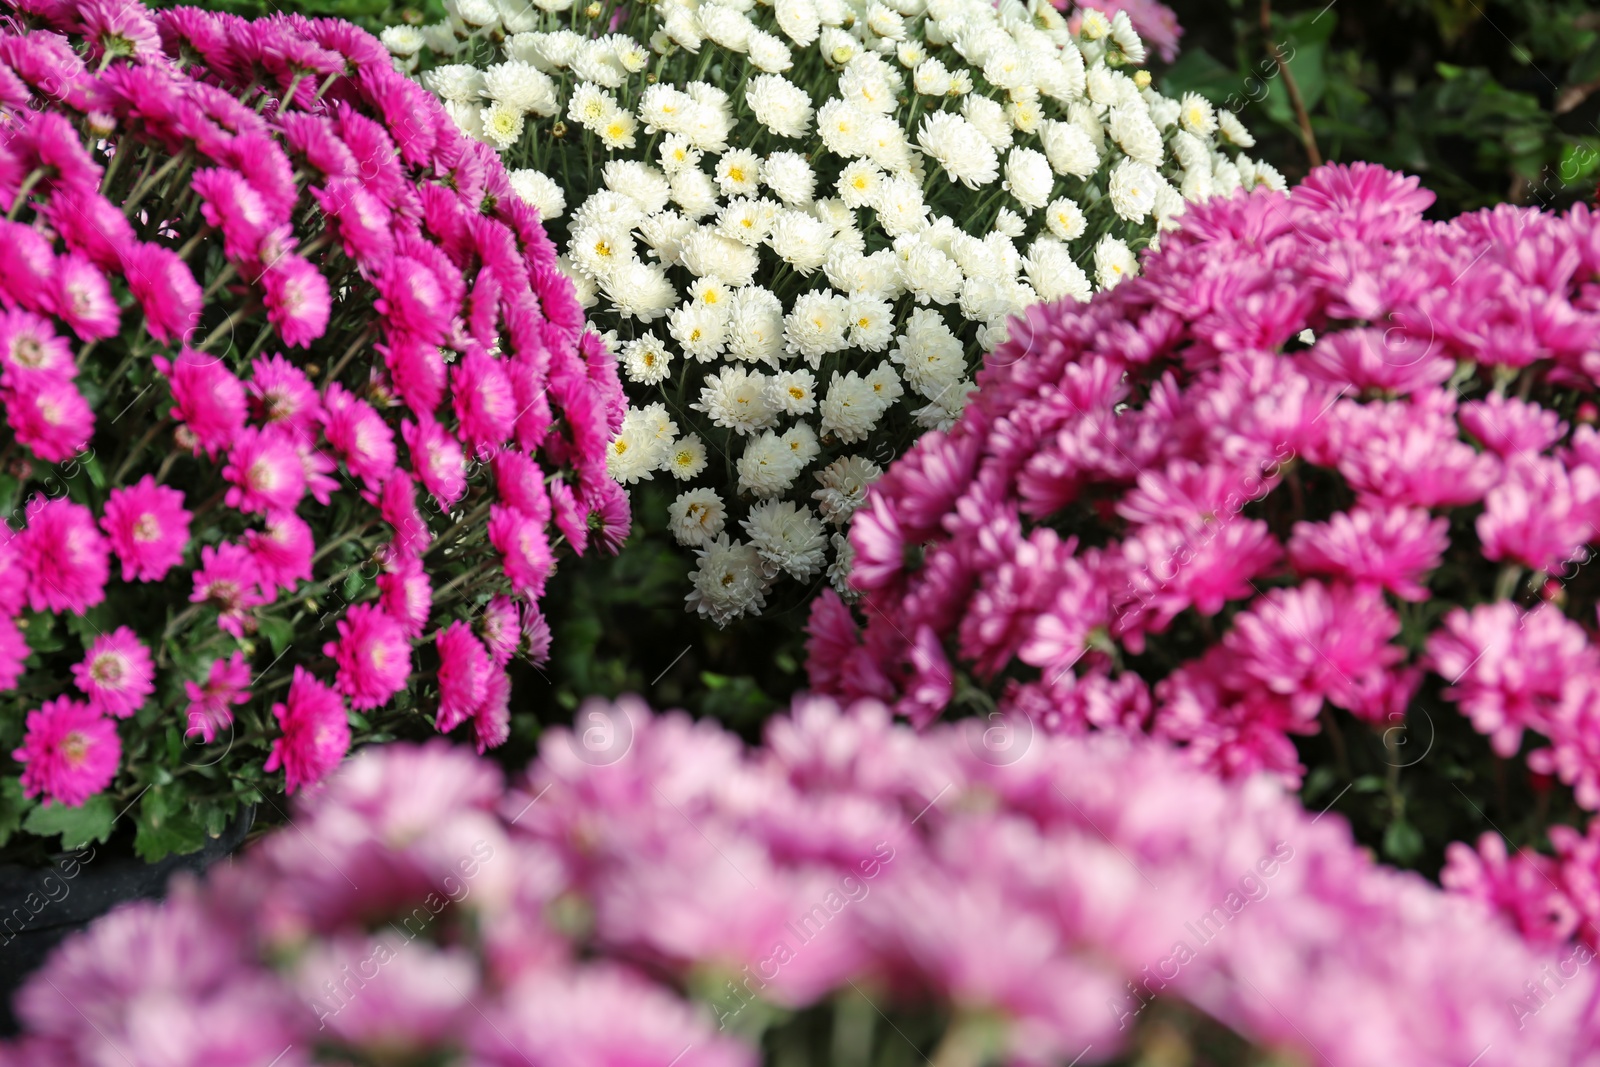 Photo of View of fresh beautiful colorful chrysanthemum flowers